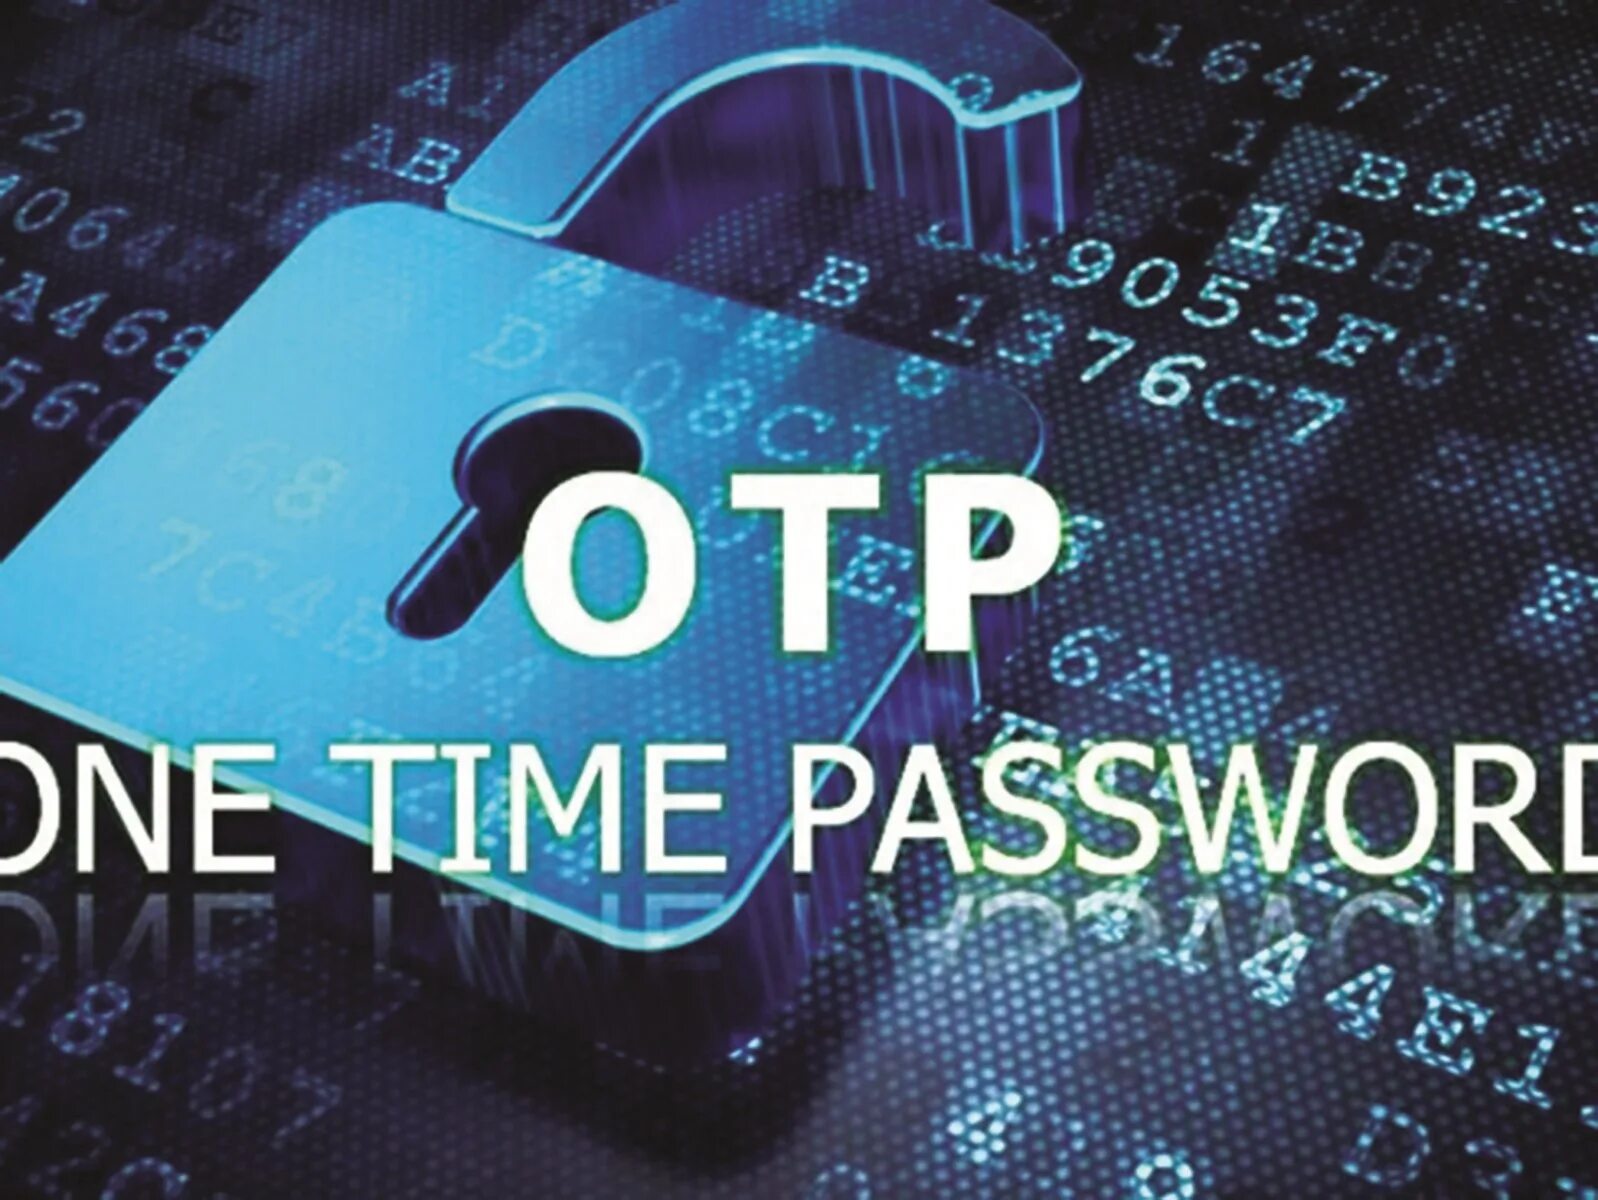 First timers. One time password. OTP пароль. Одноразовый пароль. OTP one time password.